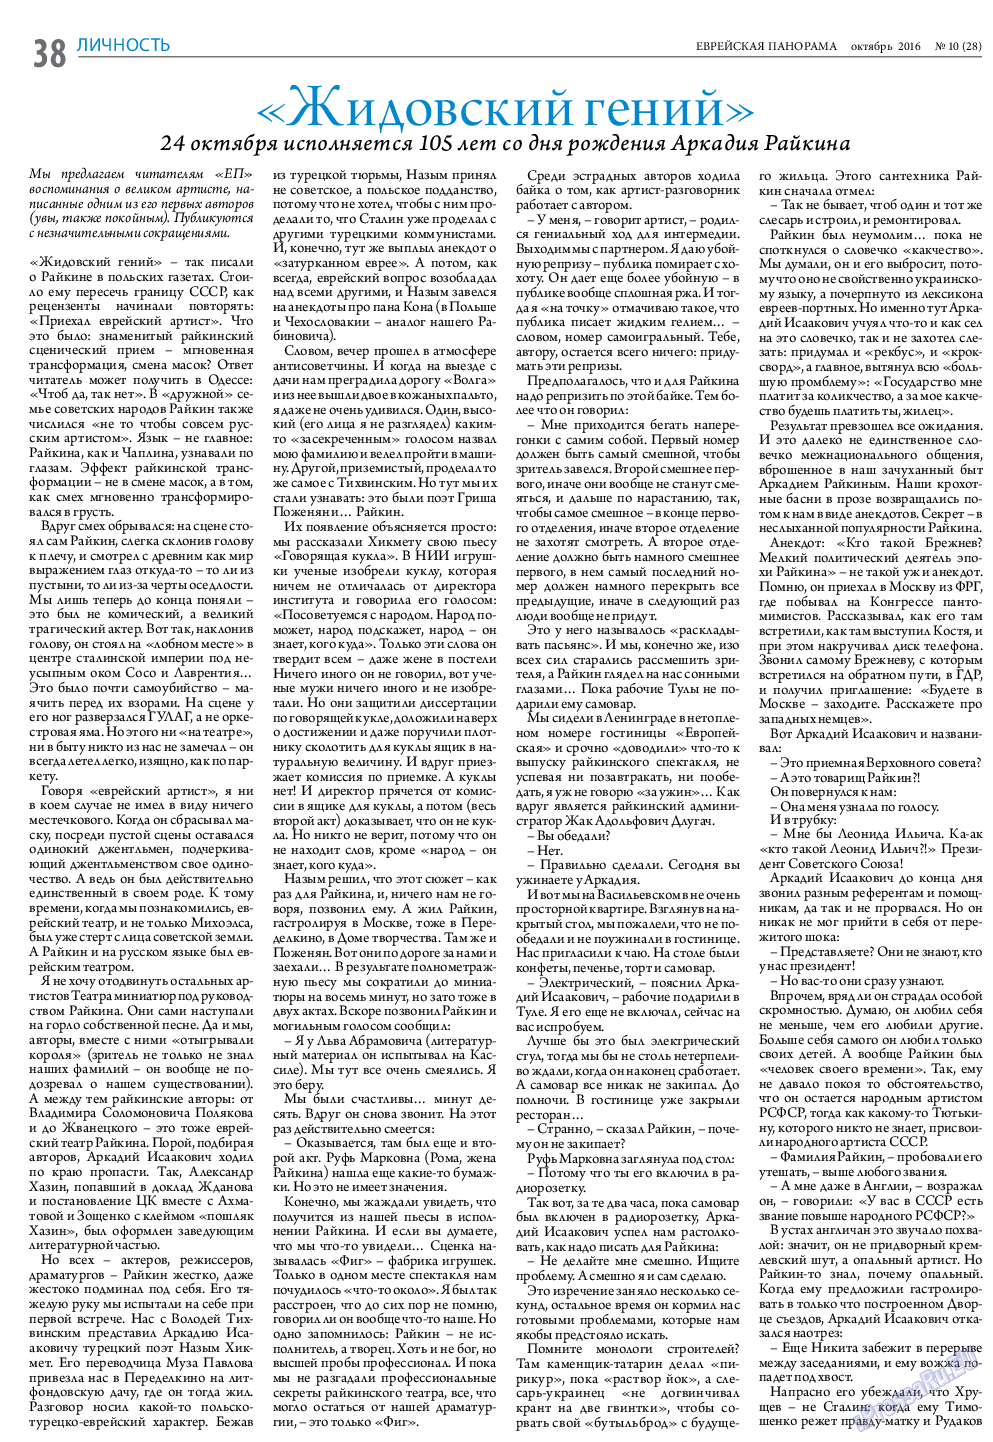 Еврейская панорама, газета. 2016 №10 стр.38